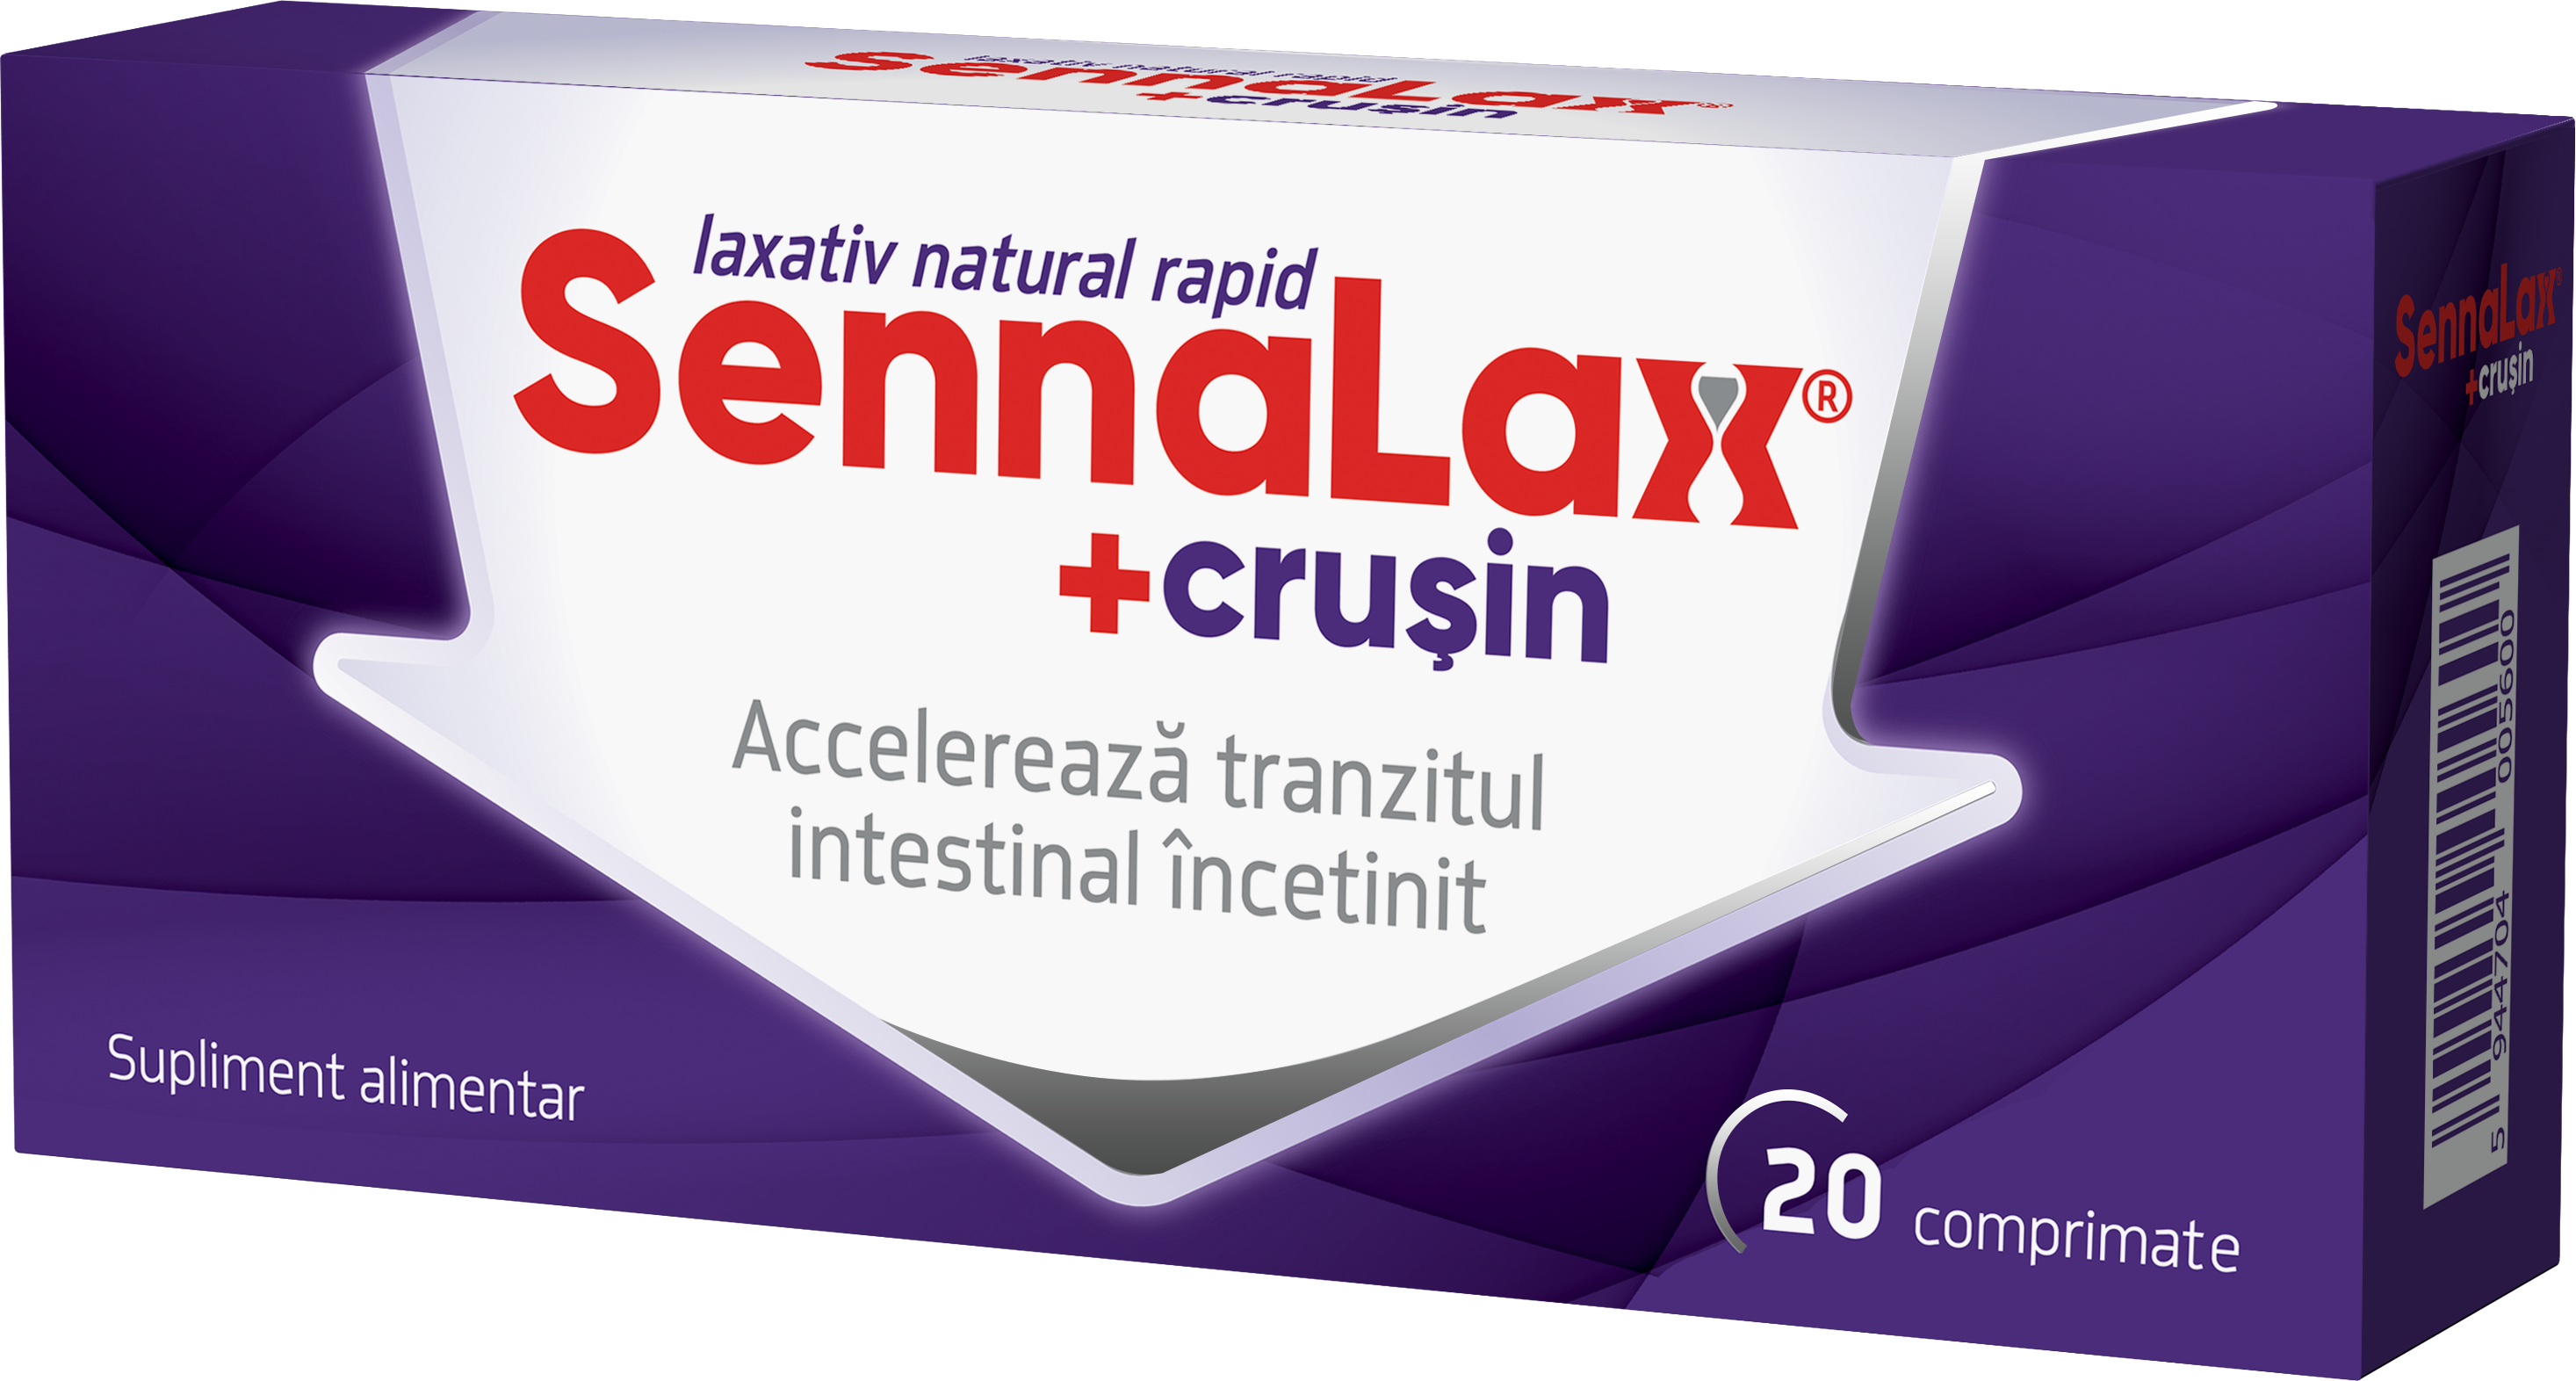 SennaLax® Plus Crusin